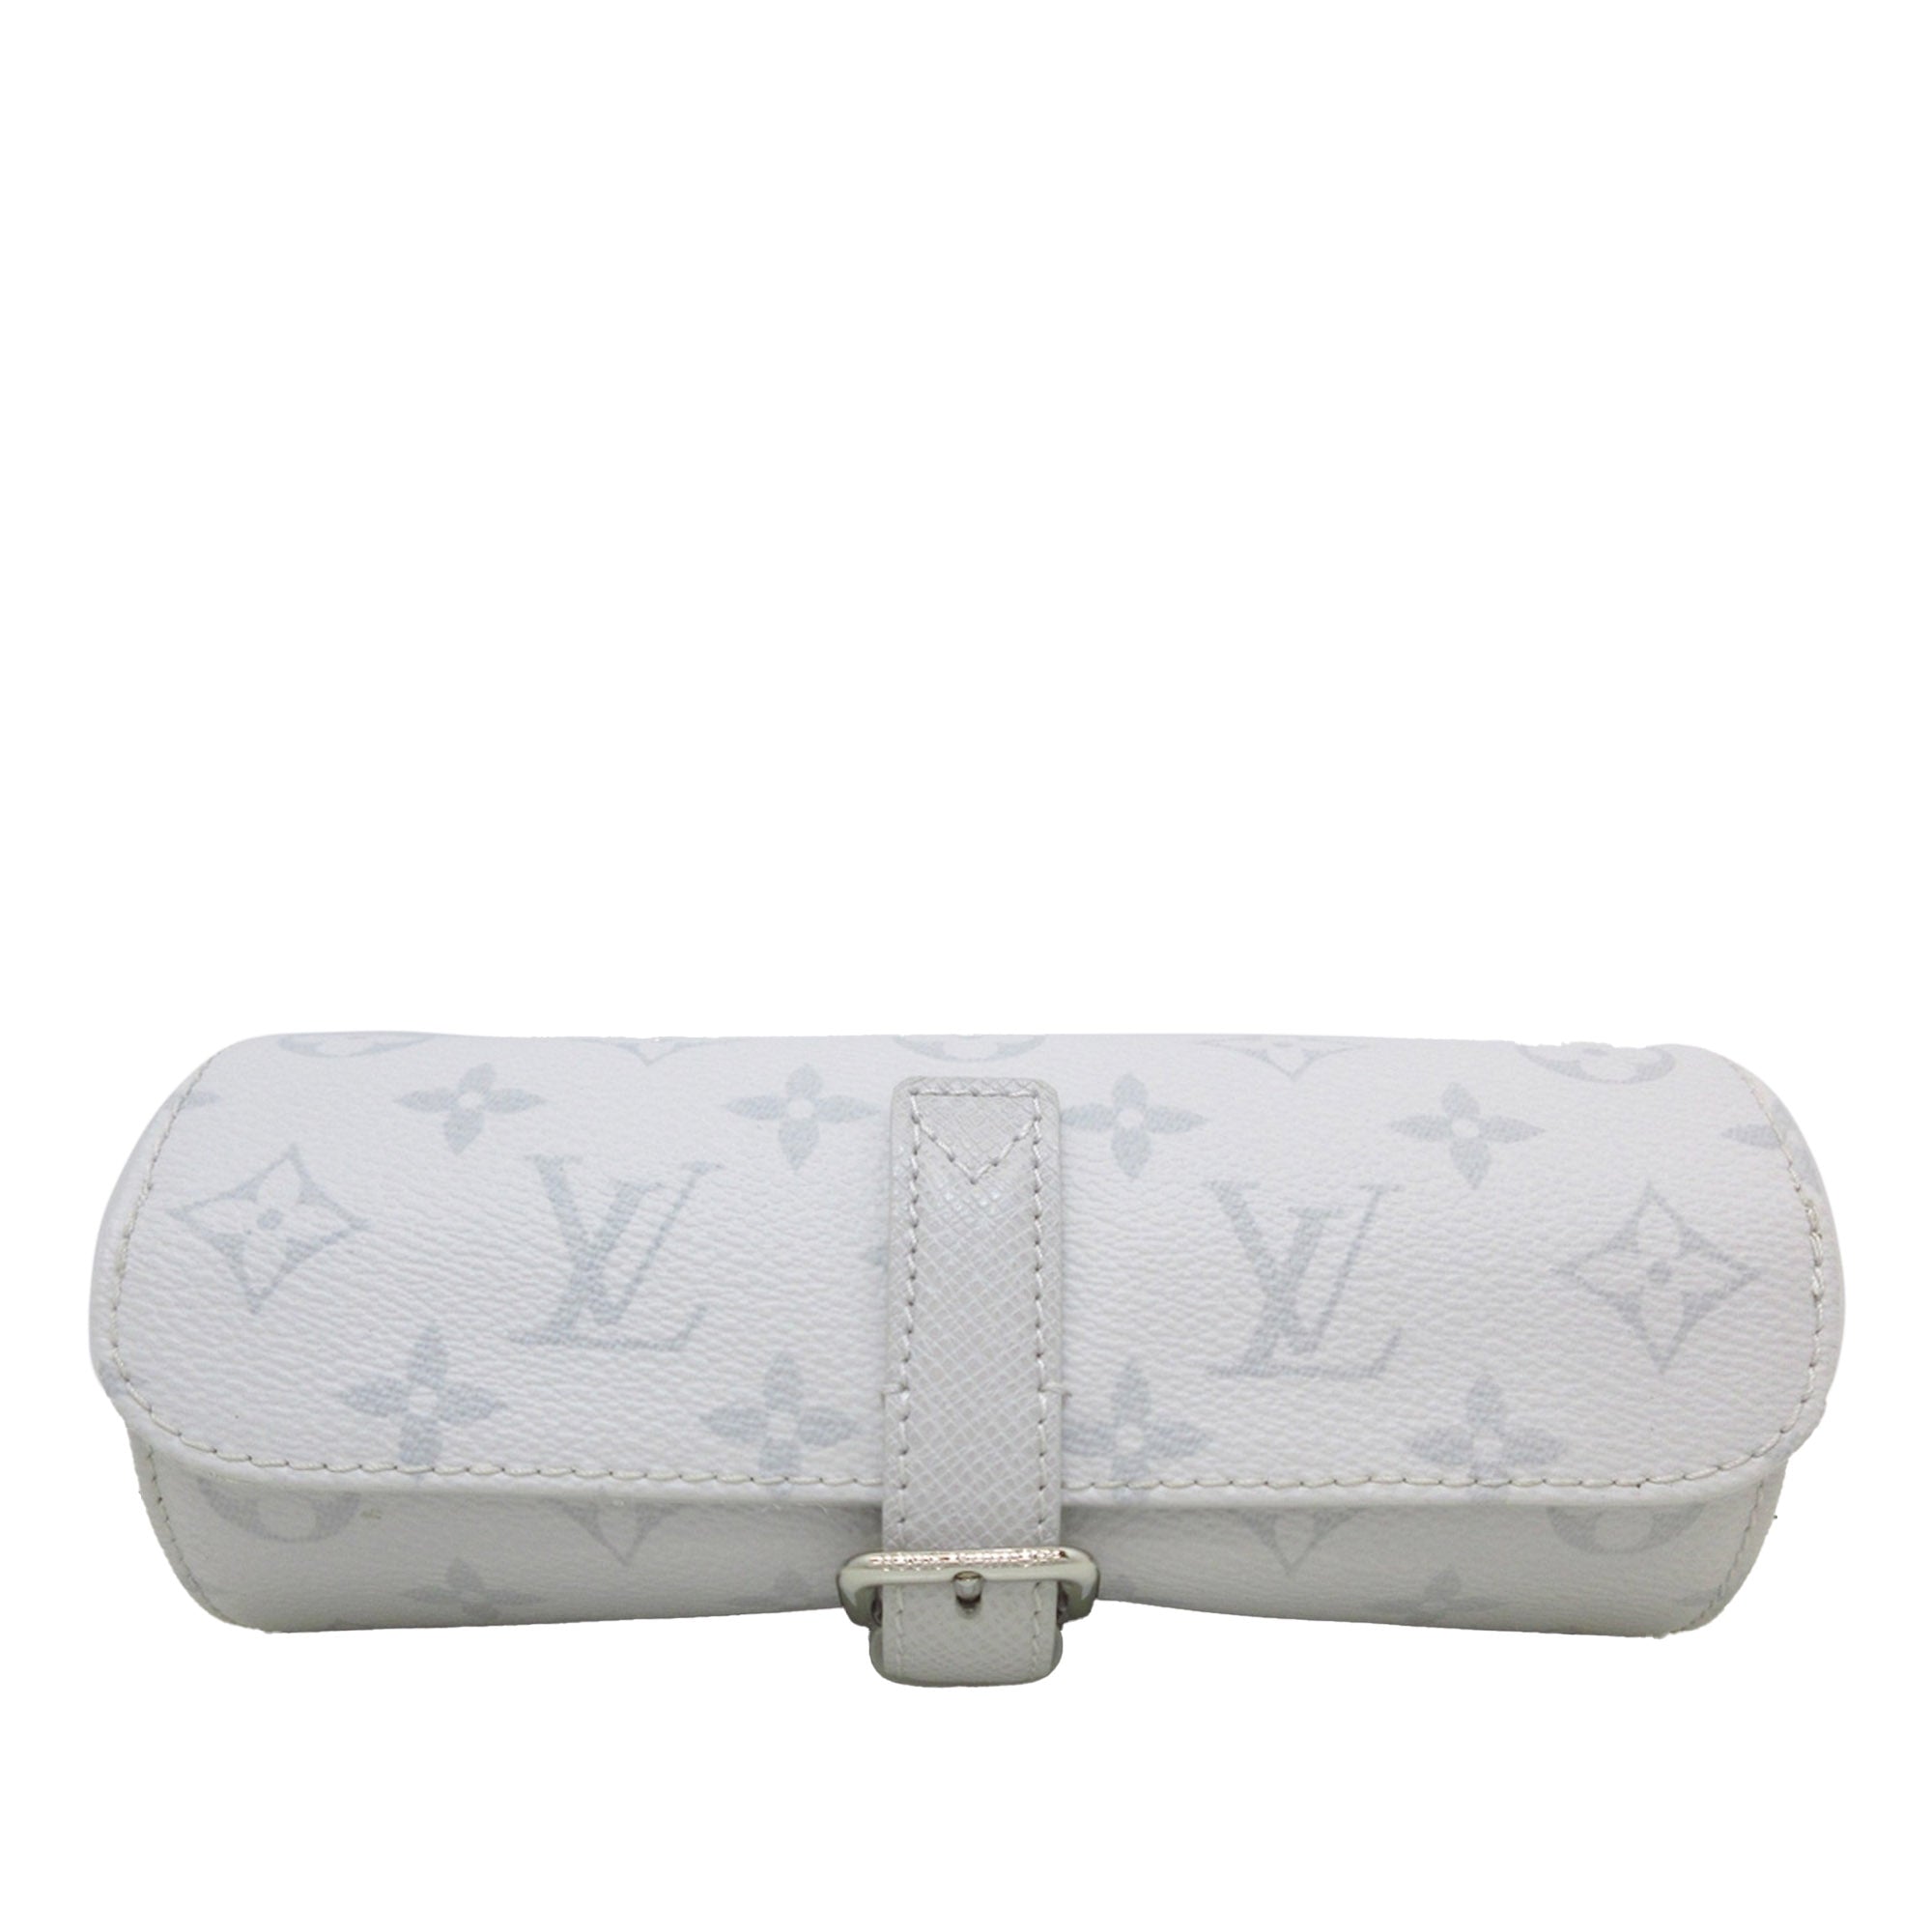 Louis Vuitton, Bags, Louis Vuitton Continental Wallet Original Box